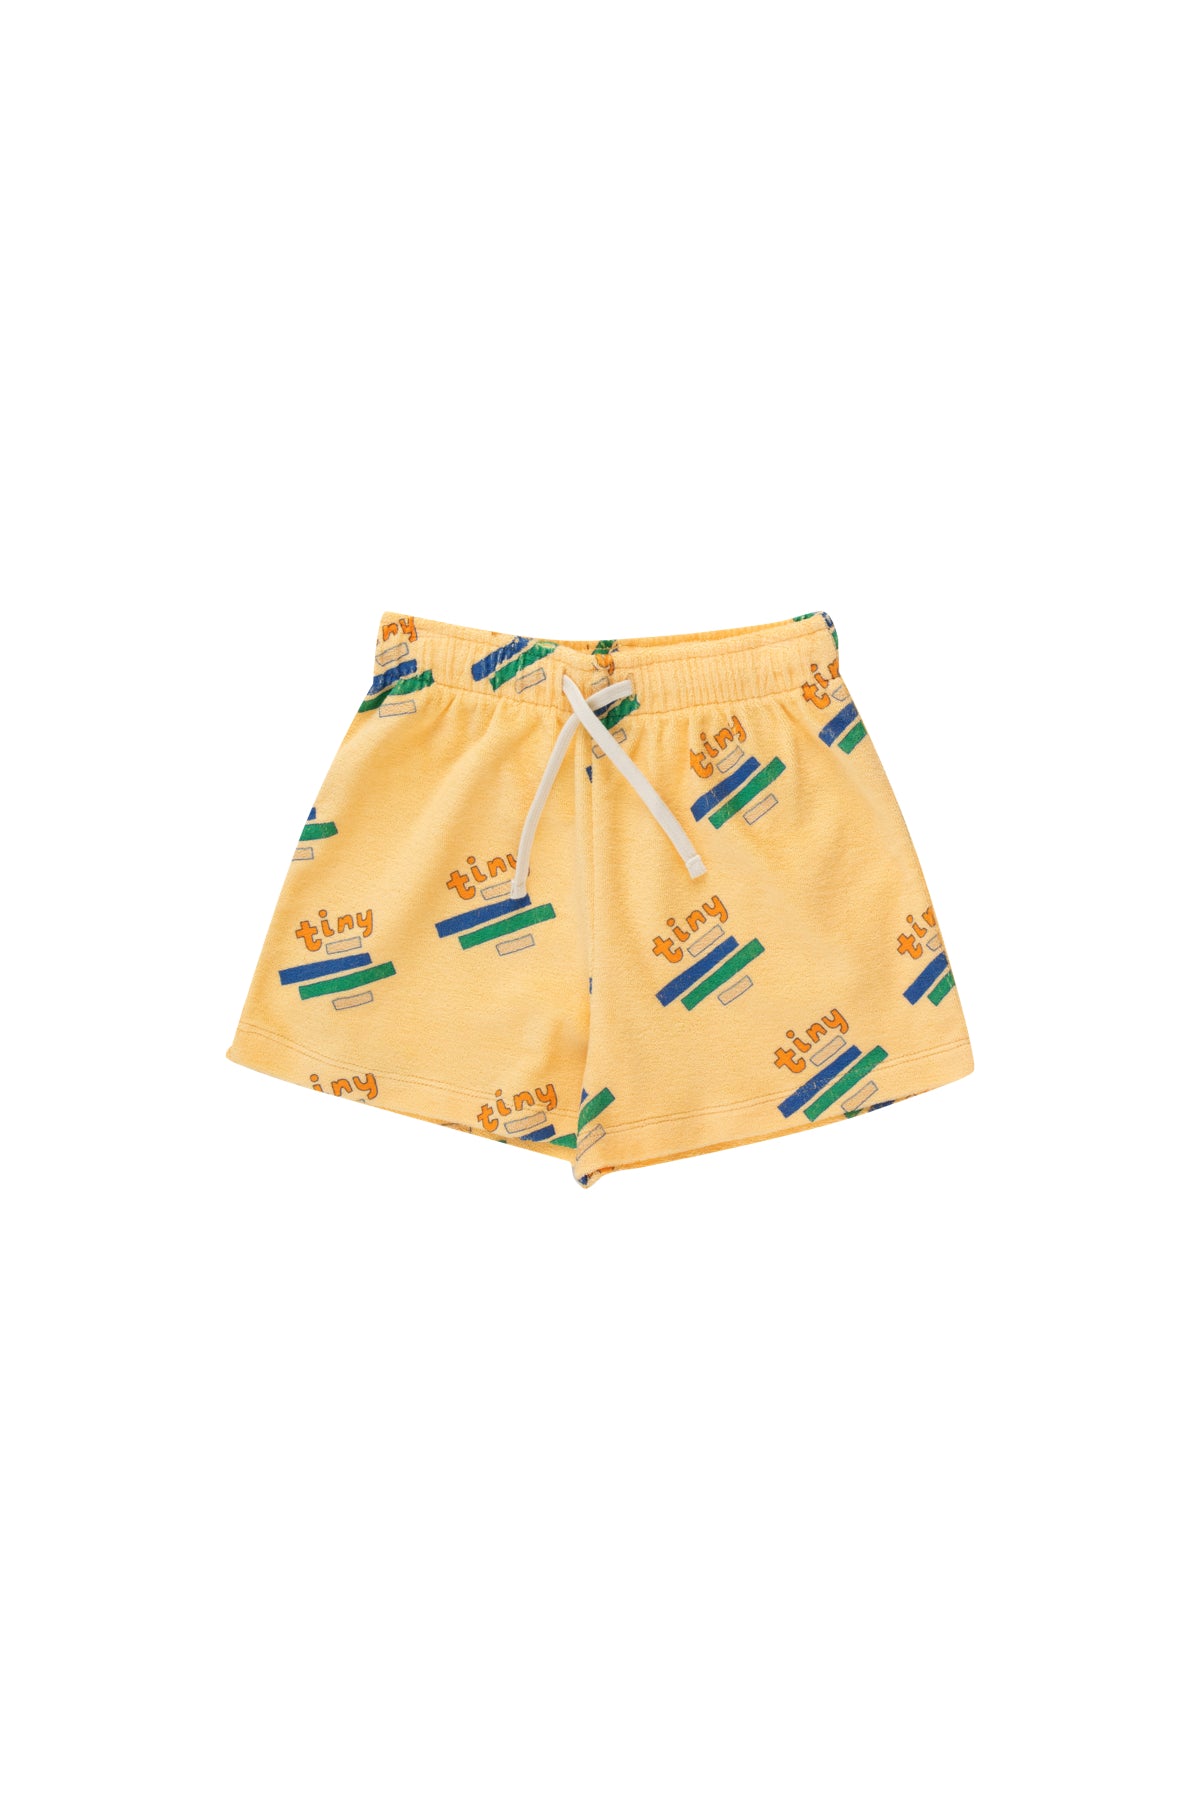 Tiny Cottons - tiny shorts - mellow yellow